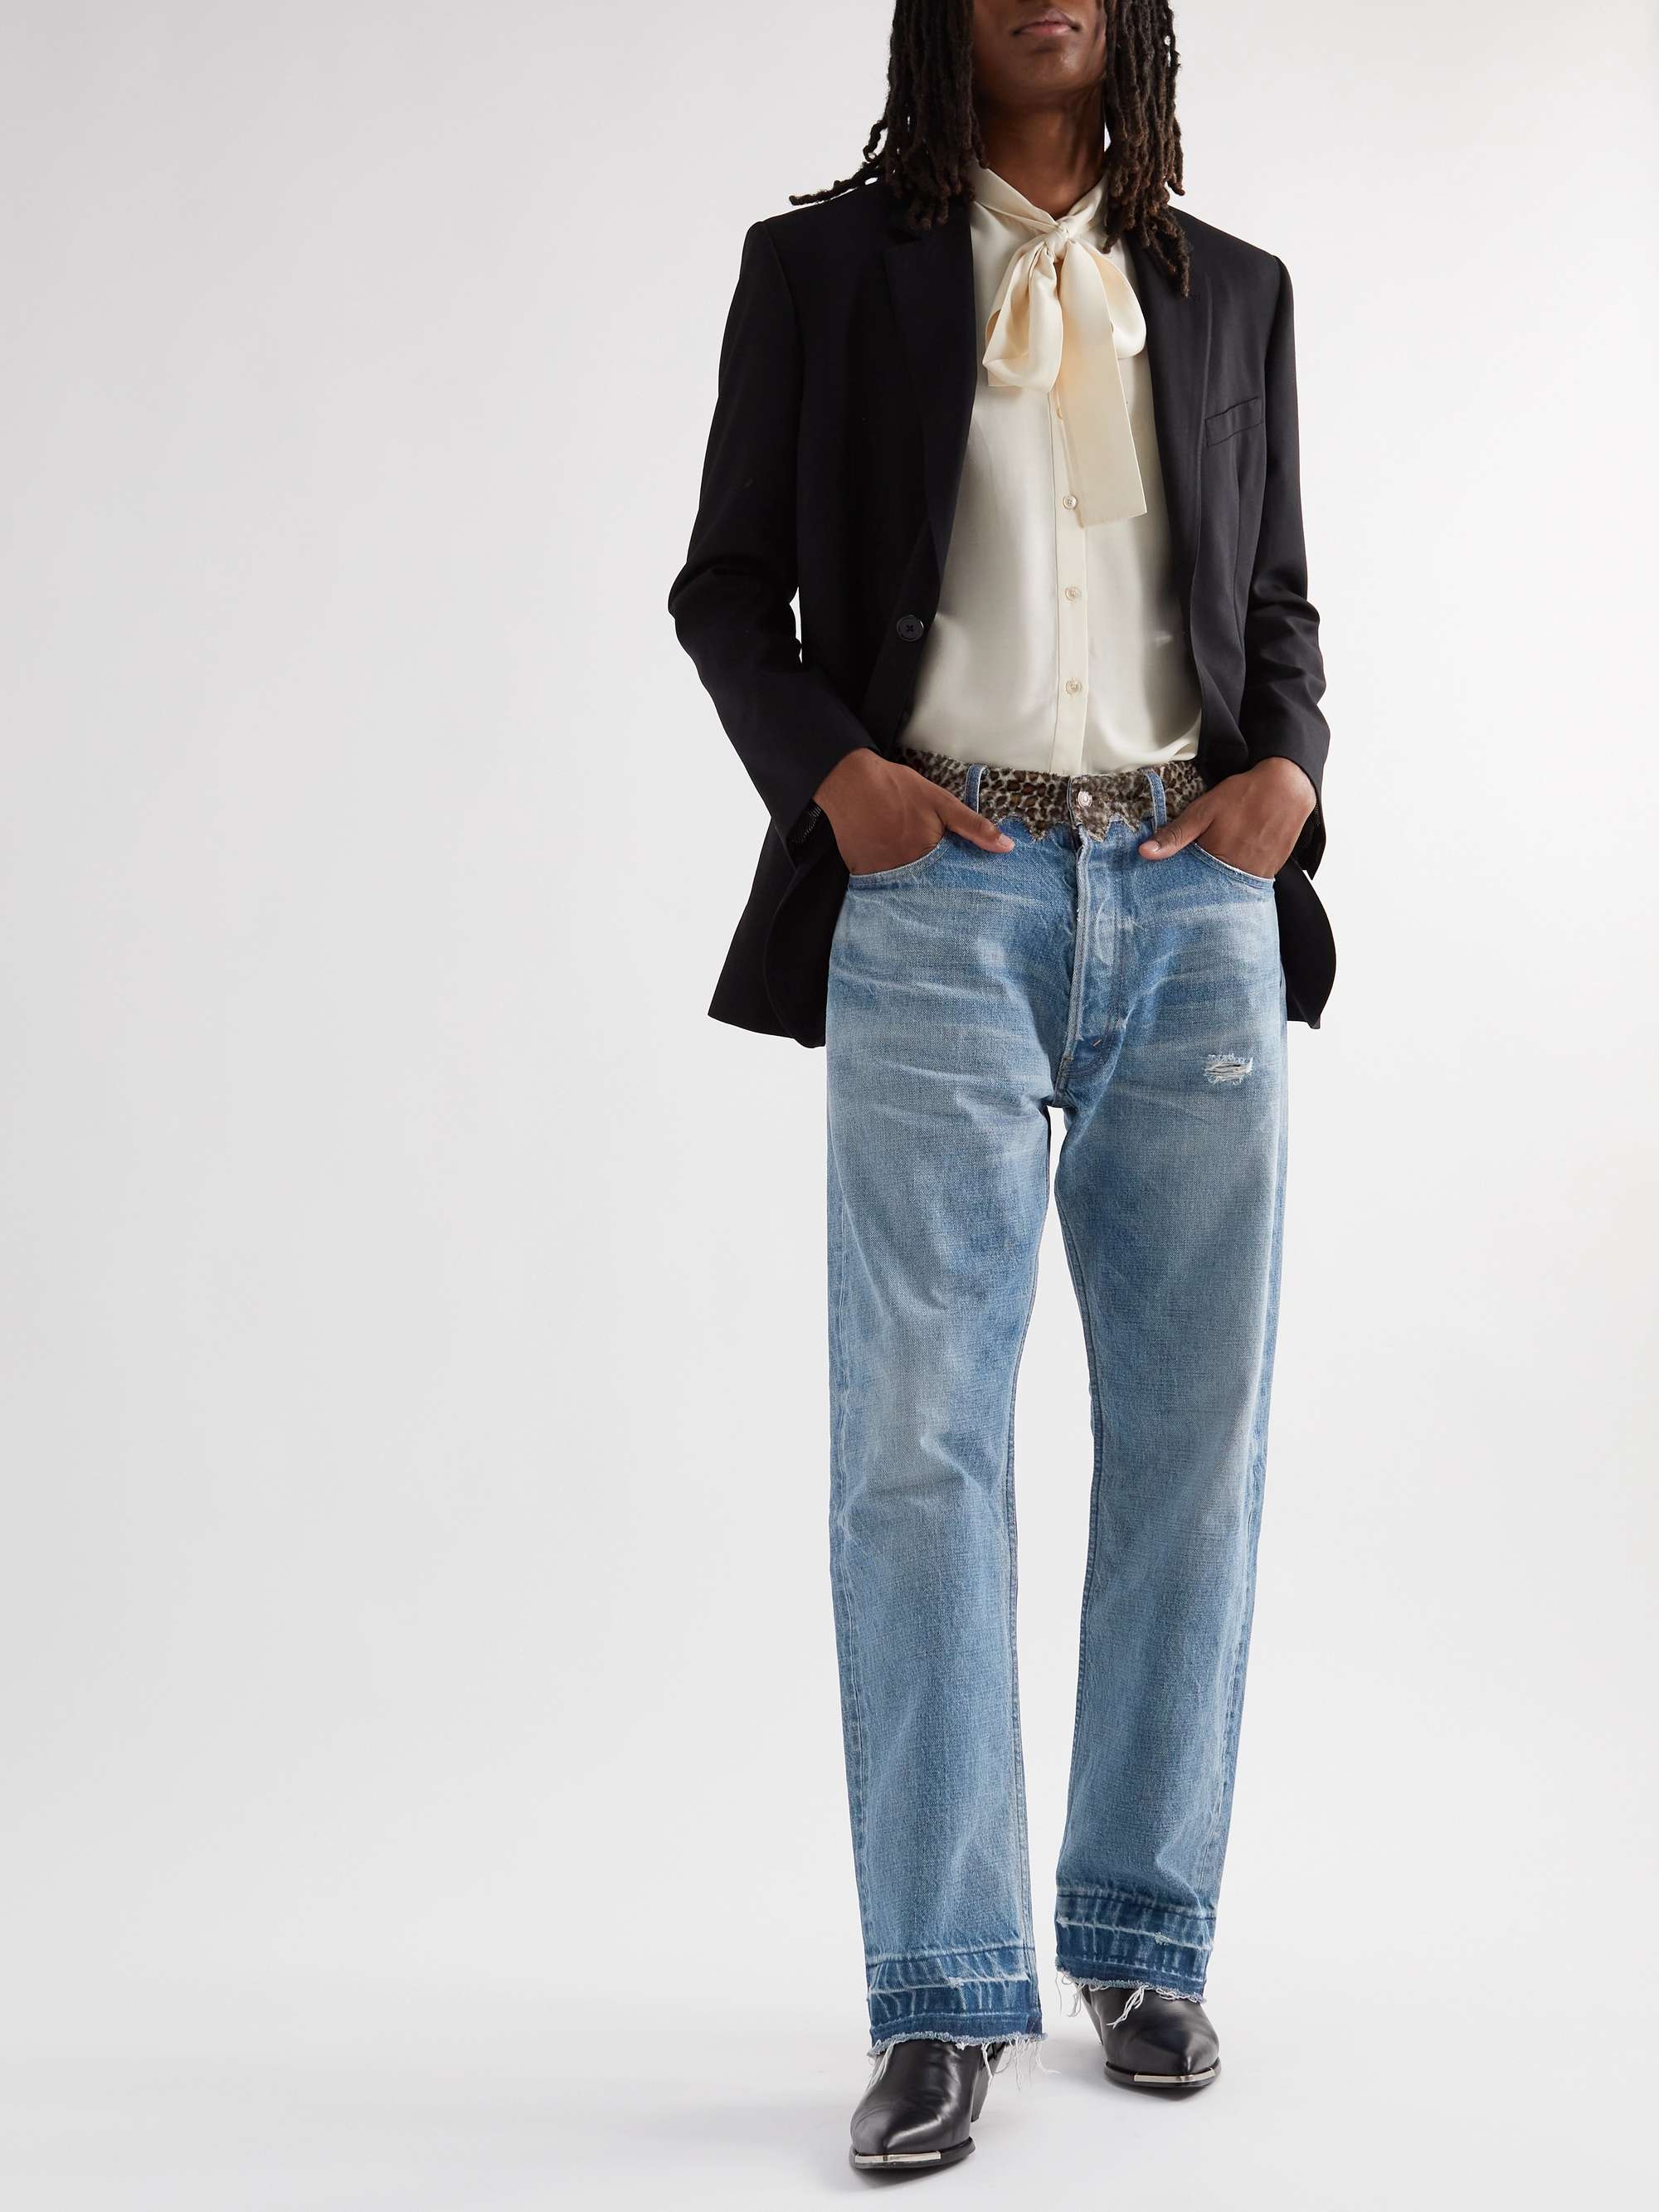 CELINE HOMME Wesley Straight-Leg Faux Fur-Trimmed Distressed Jeans